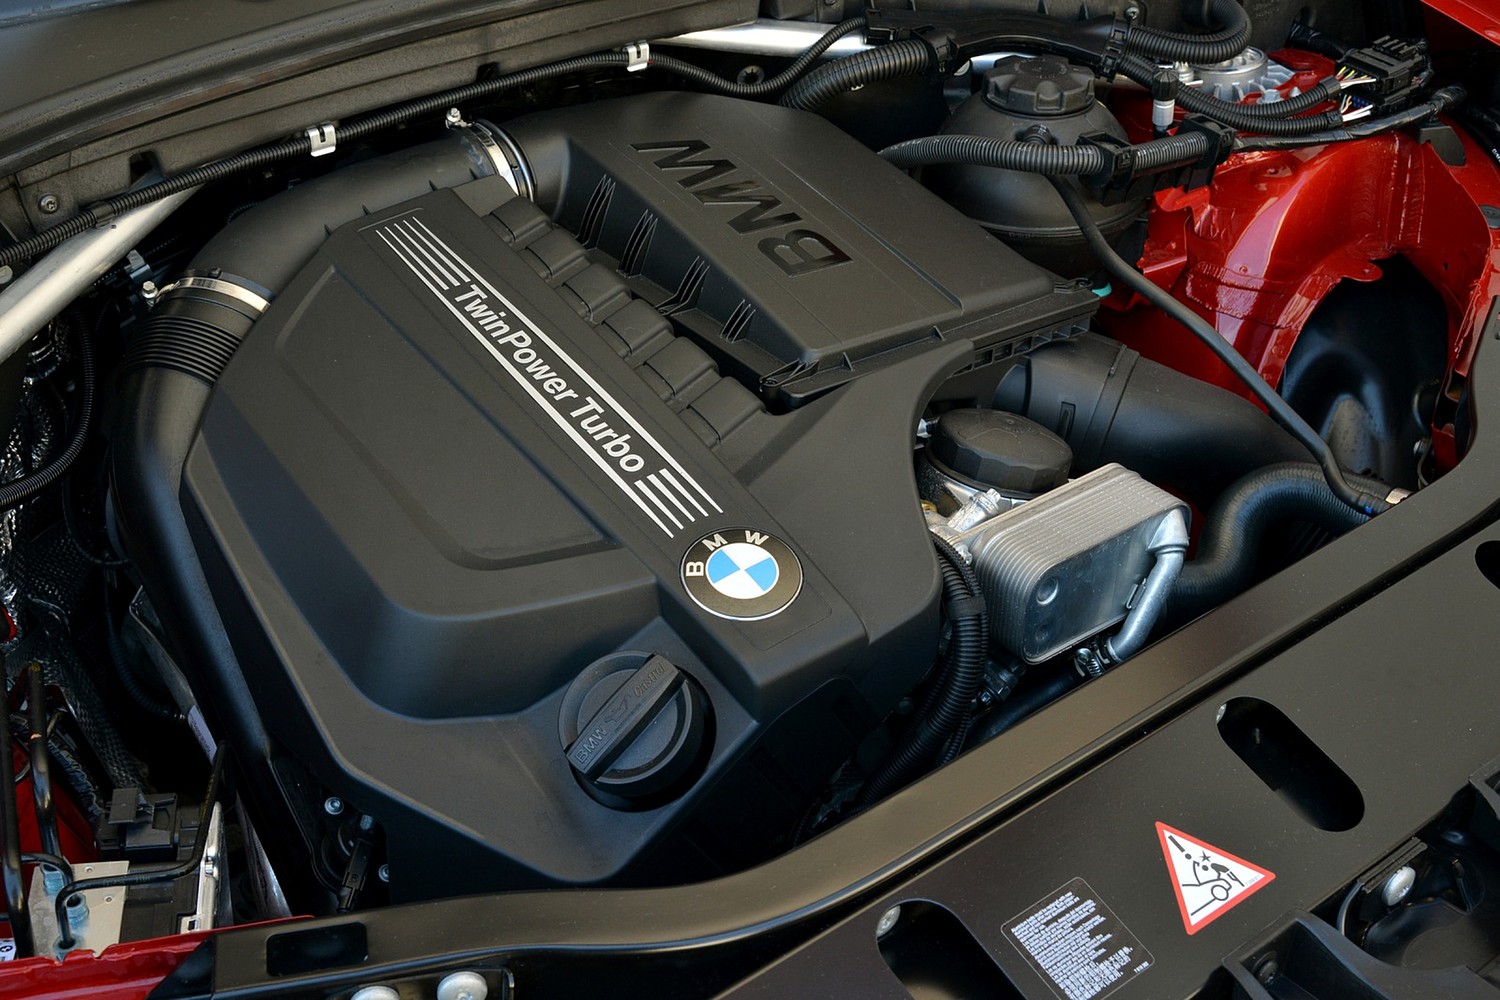 BMW X4 xDrive35i 4dr SUV 3.0L V6 Engine (2015 model year shown)